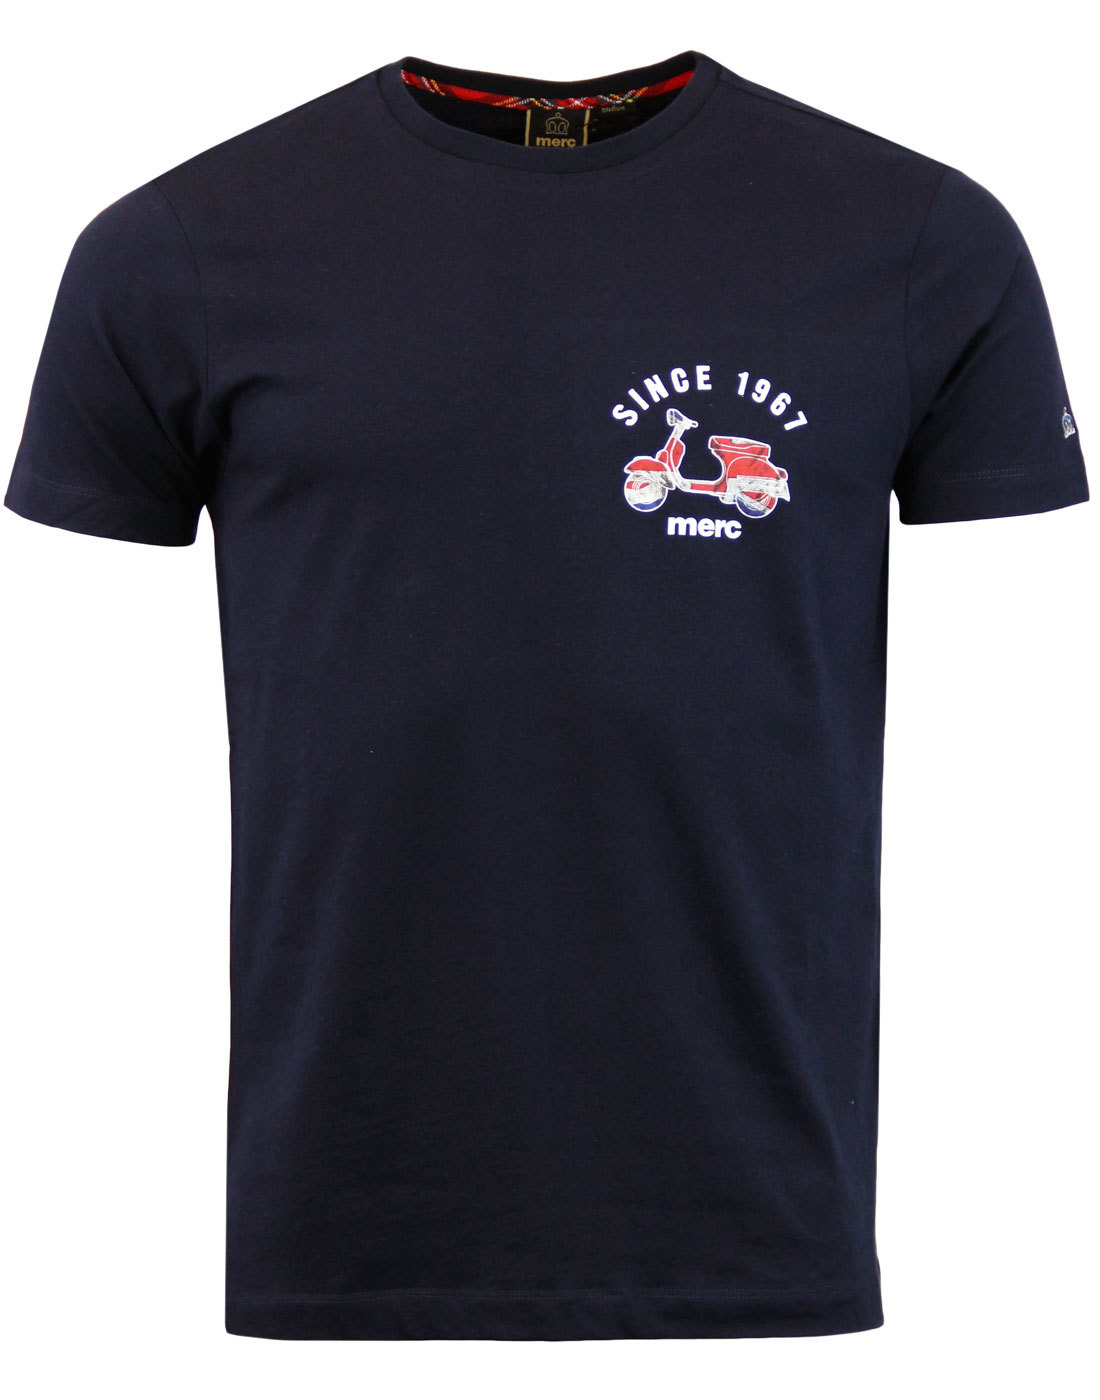 MERC Ludlow Retro Indie Mod Union Jack Scooter Print T-shirt Navy